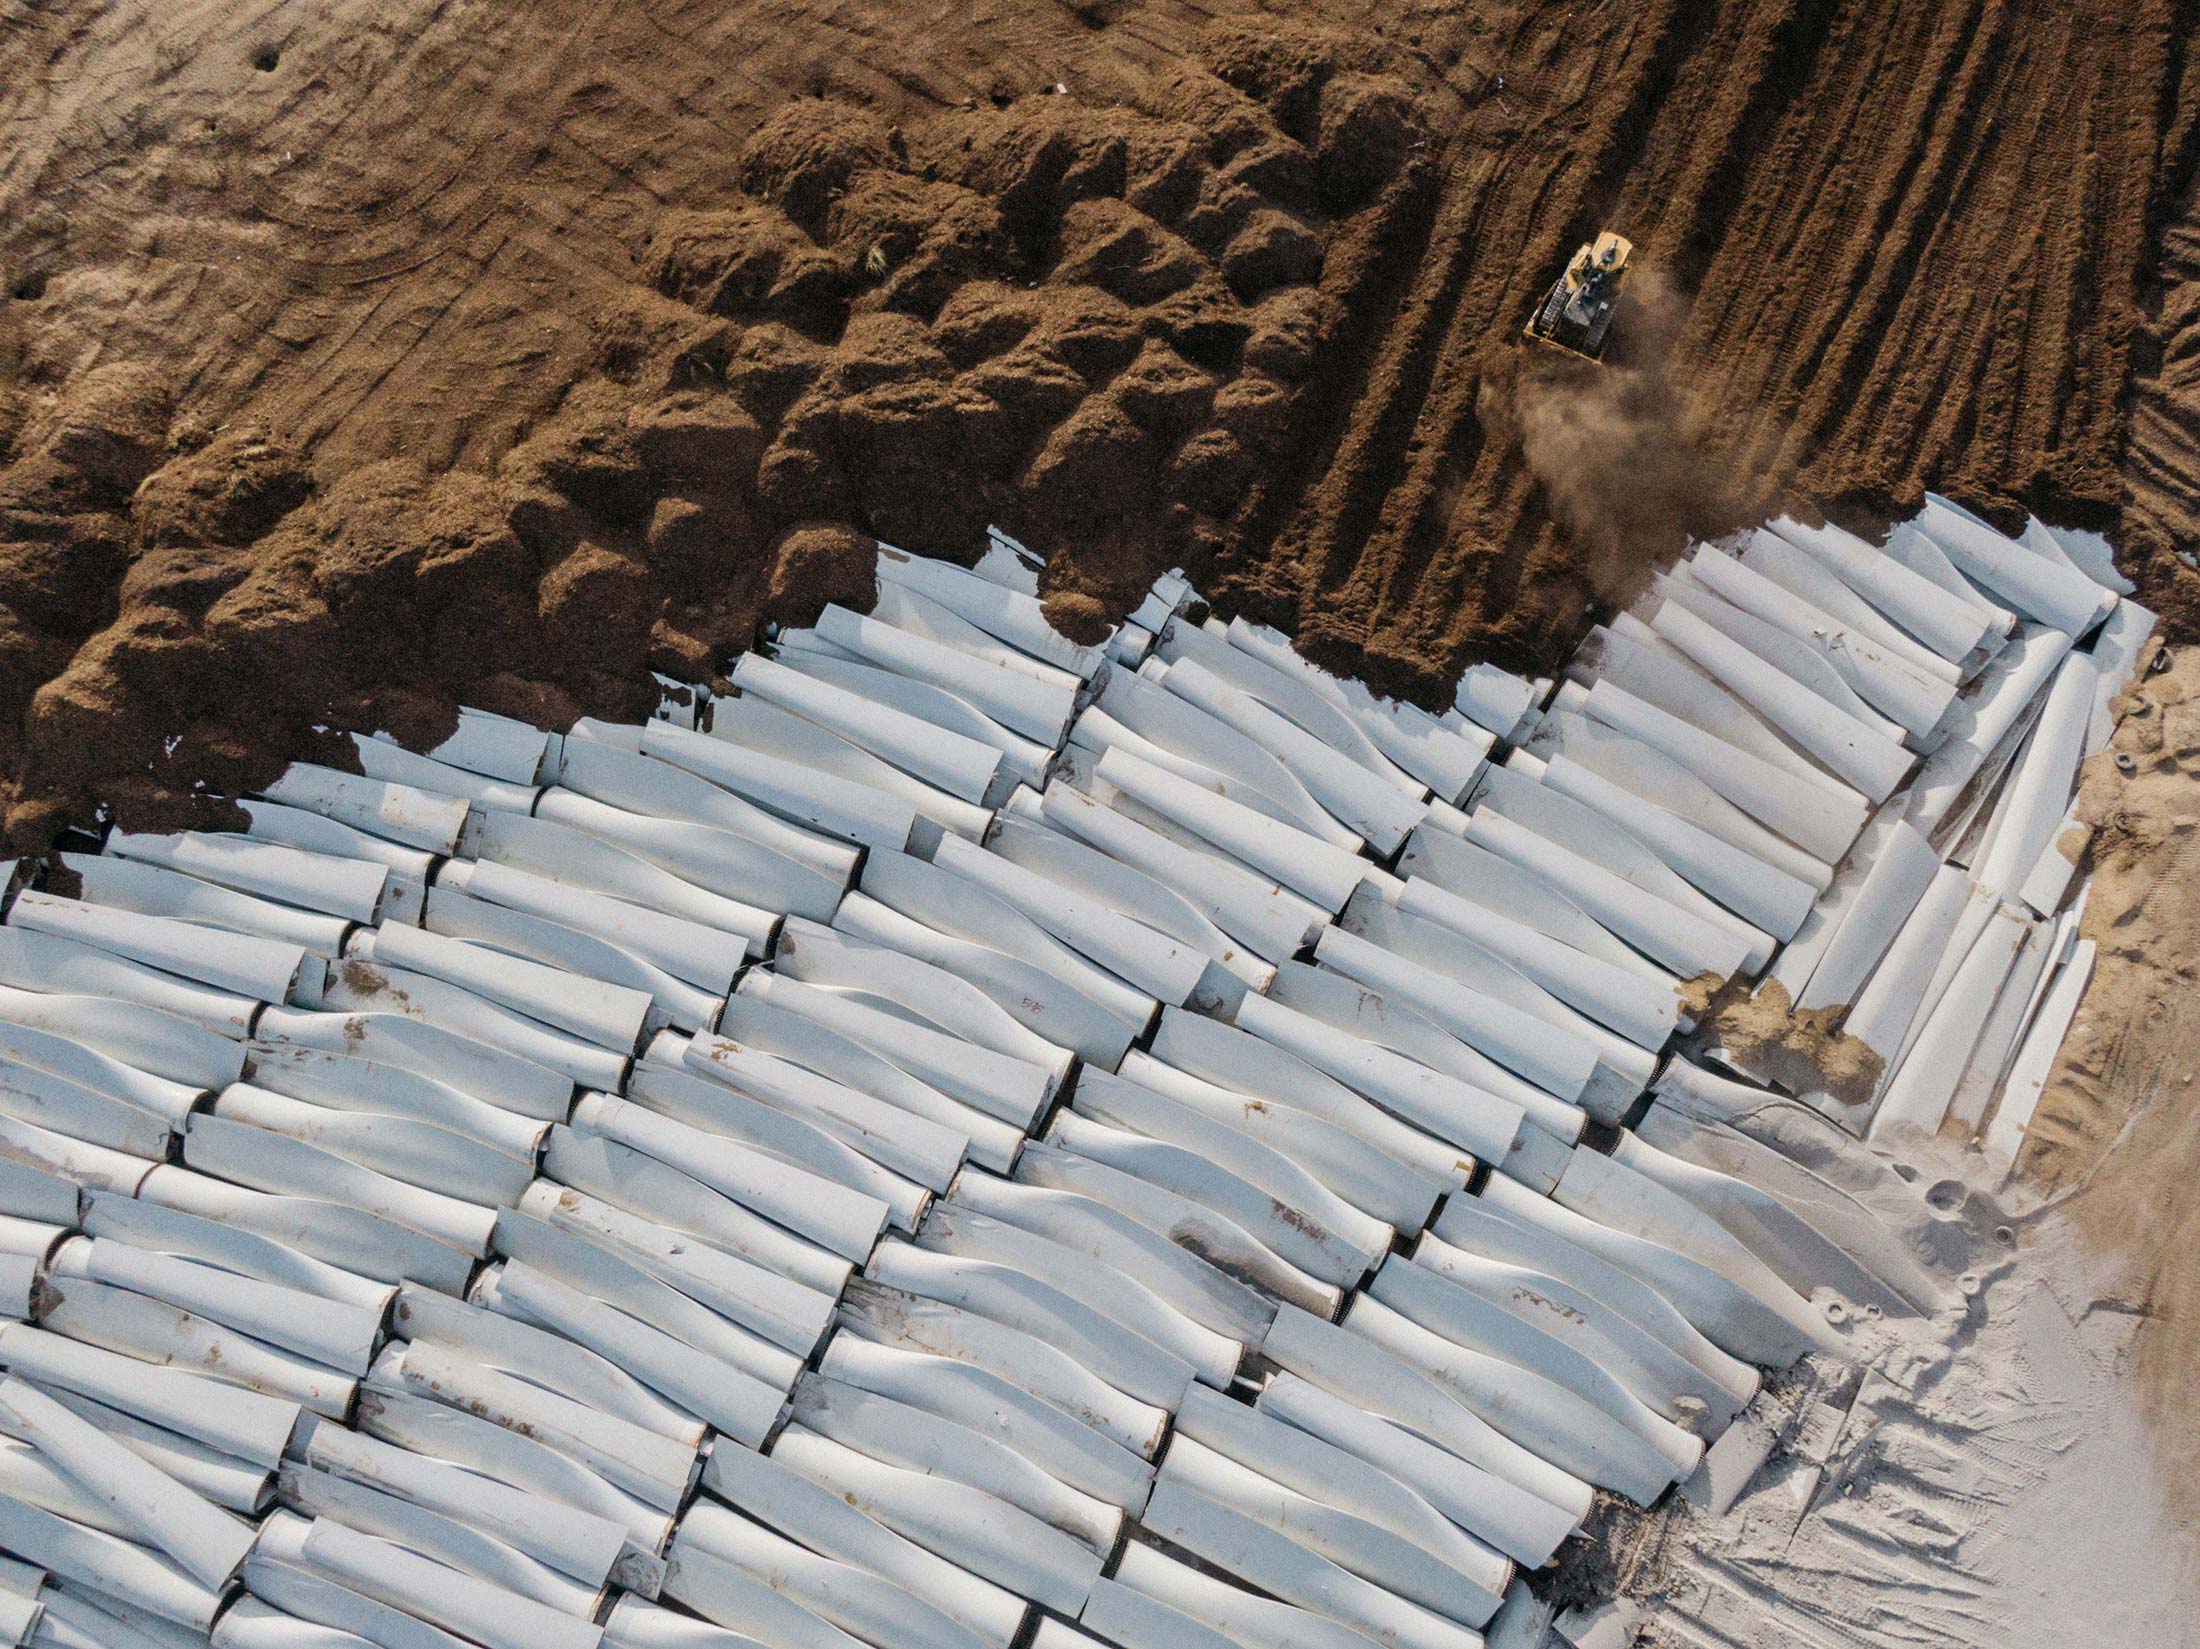 Fragments of wind turbine blades await burial at the Casper Regional Landfill in Wyoming.